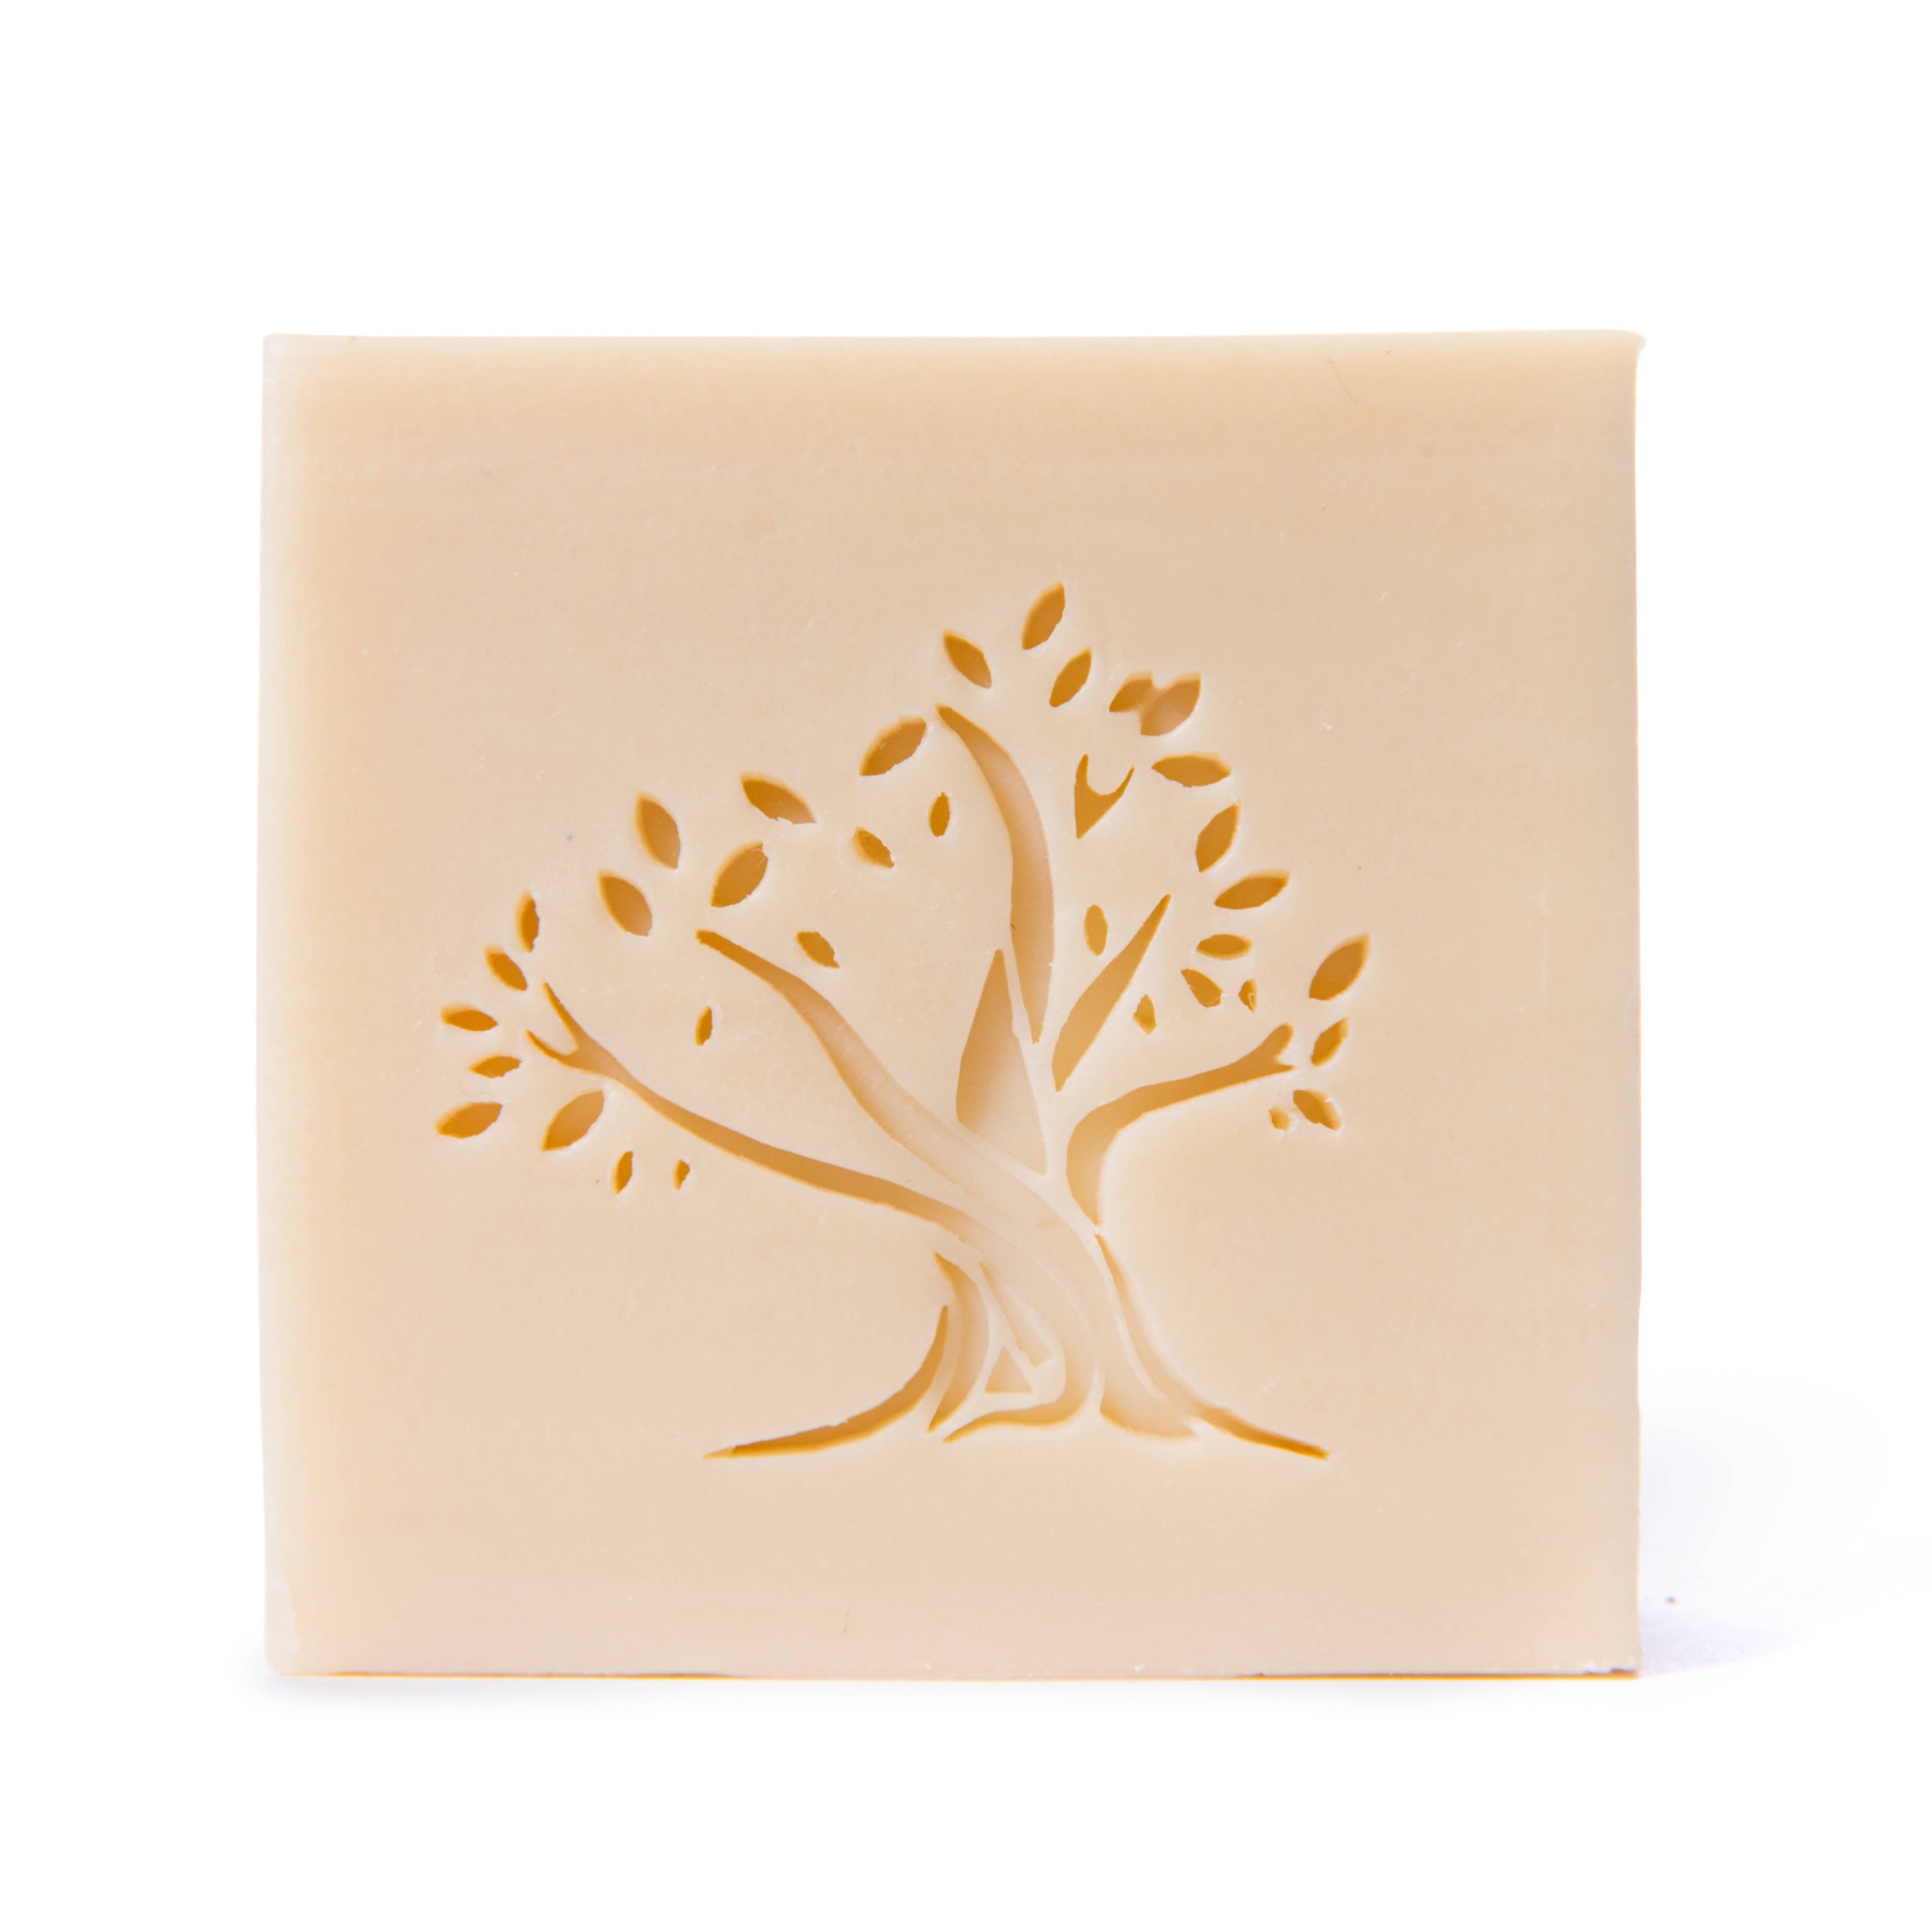 Hand Stamped artisanal soap luxury item